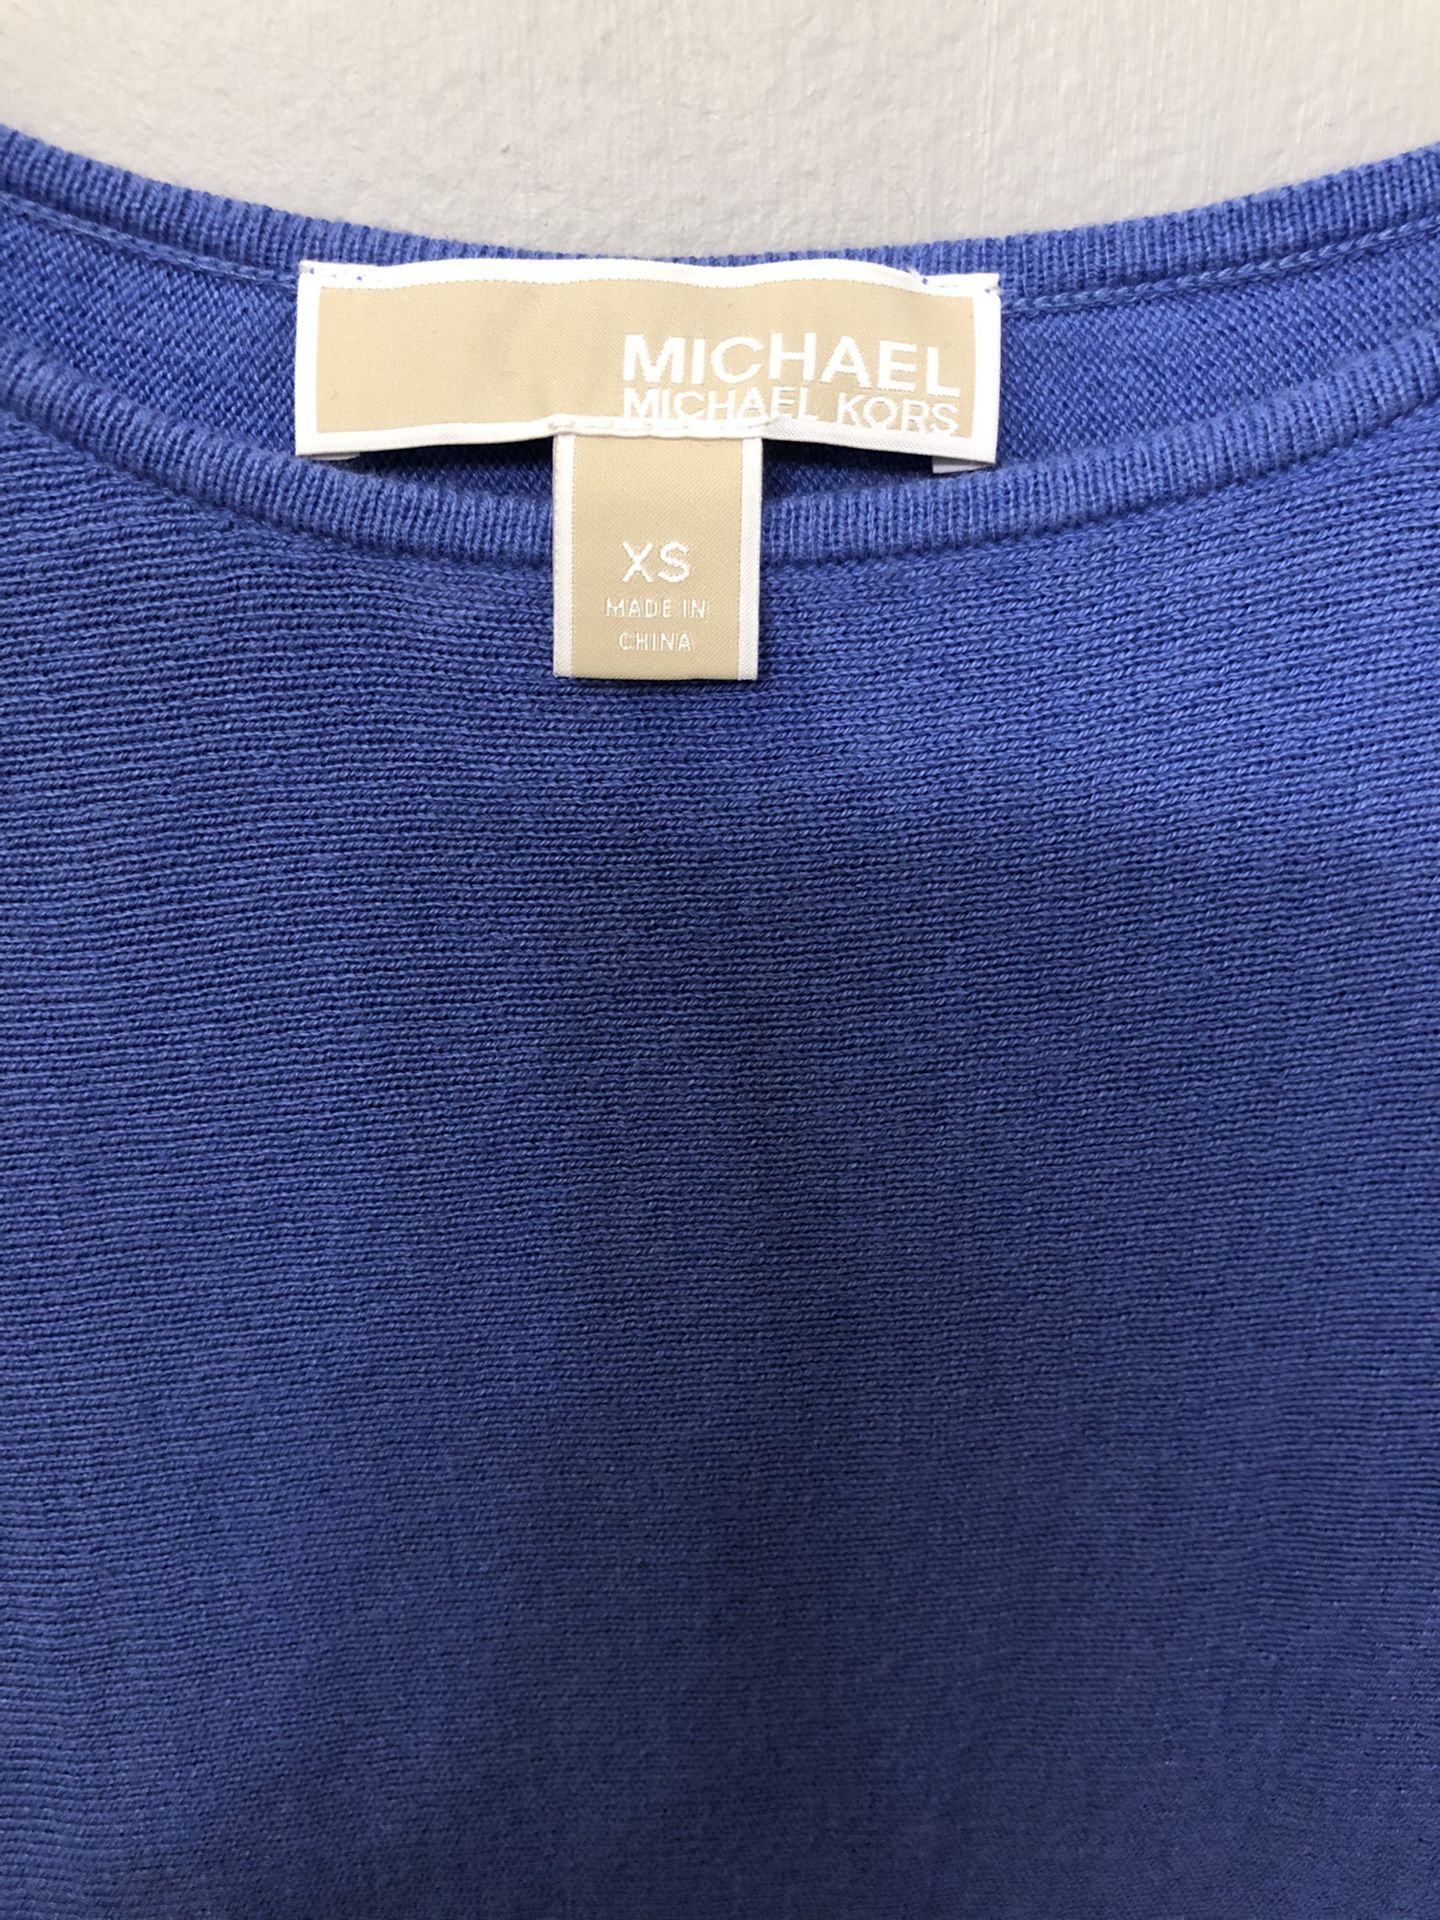 Michael Kors long sleeve shirt